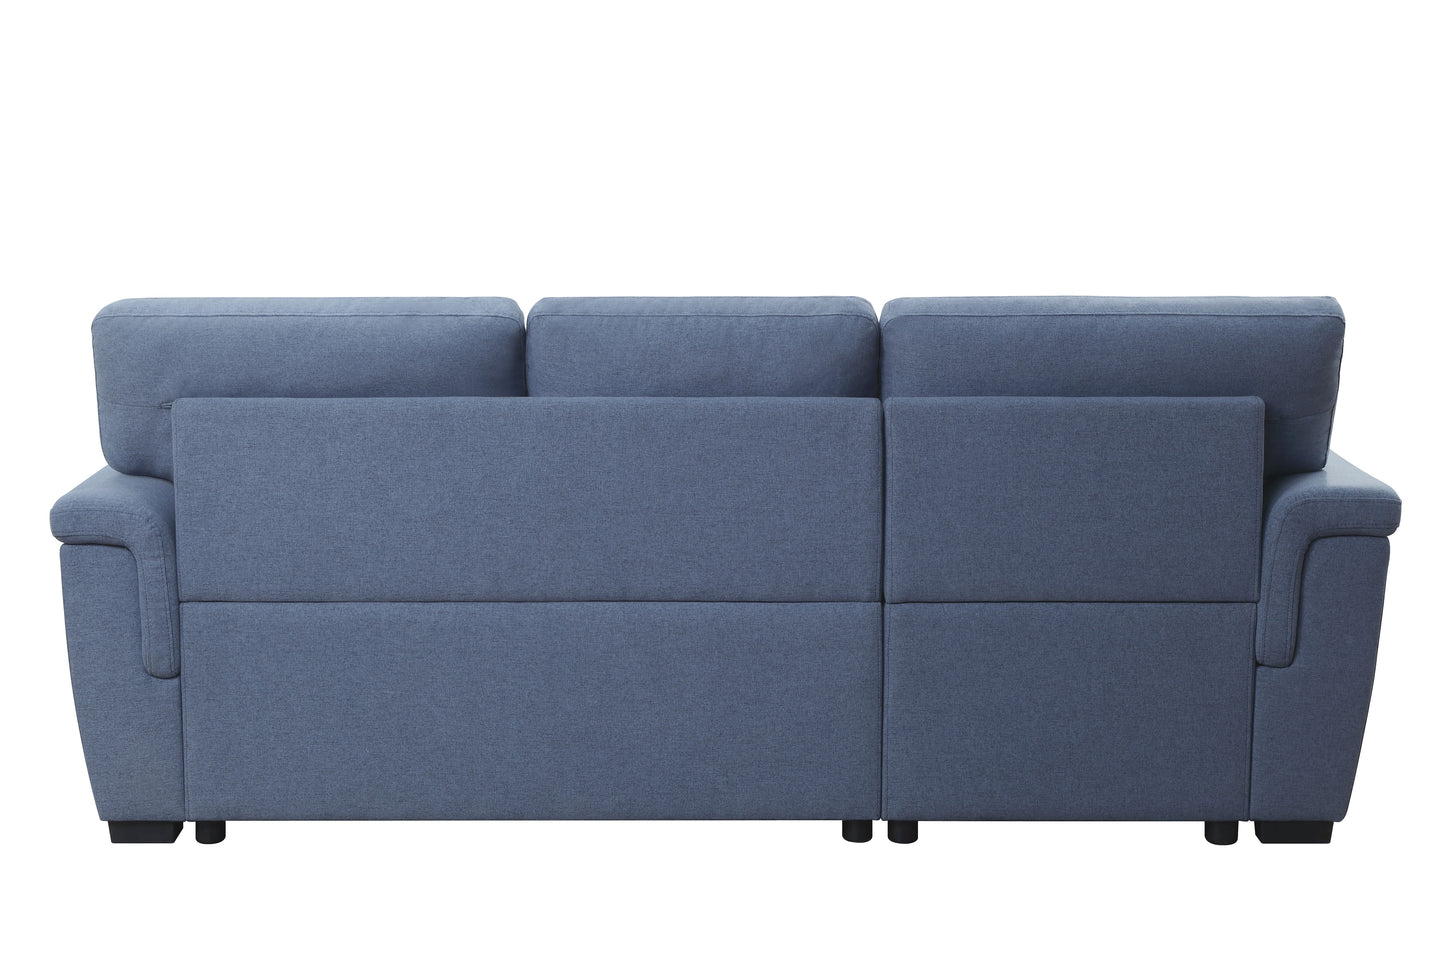 Noemi Reversible Sleeper Sectional Sofa, Blue Fabric